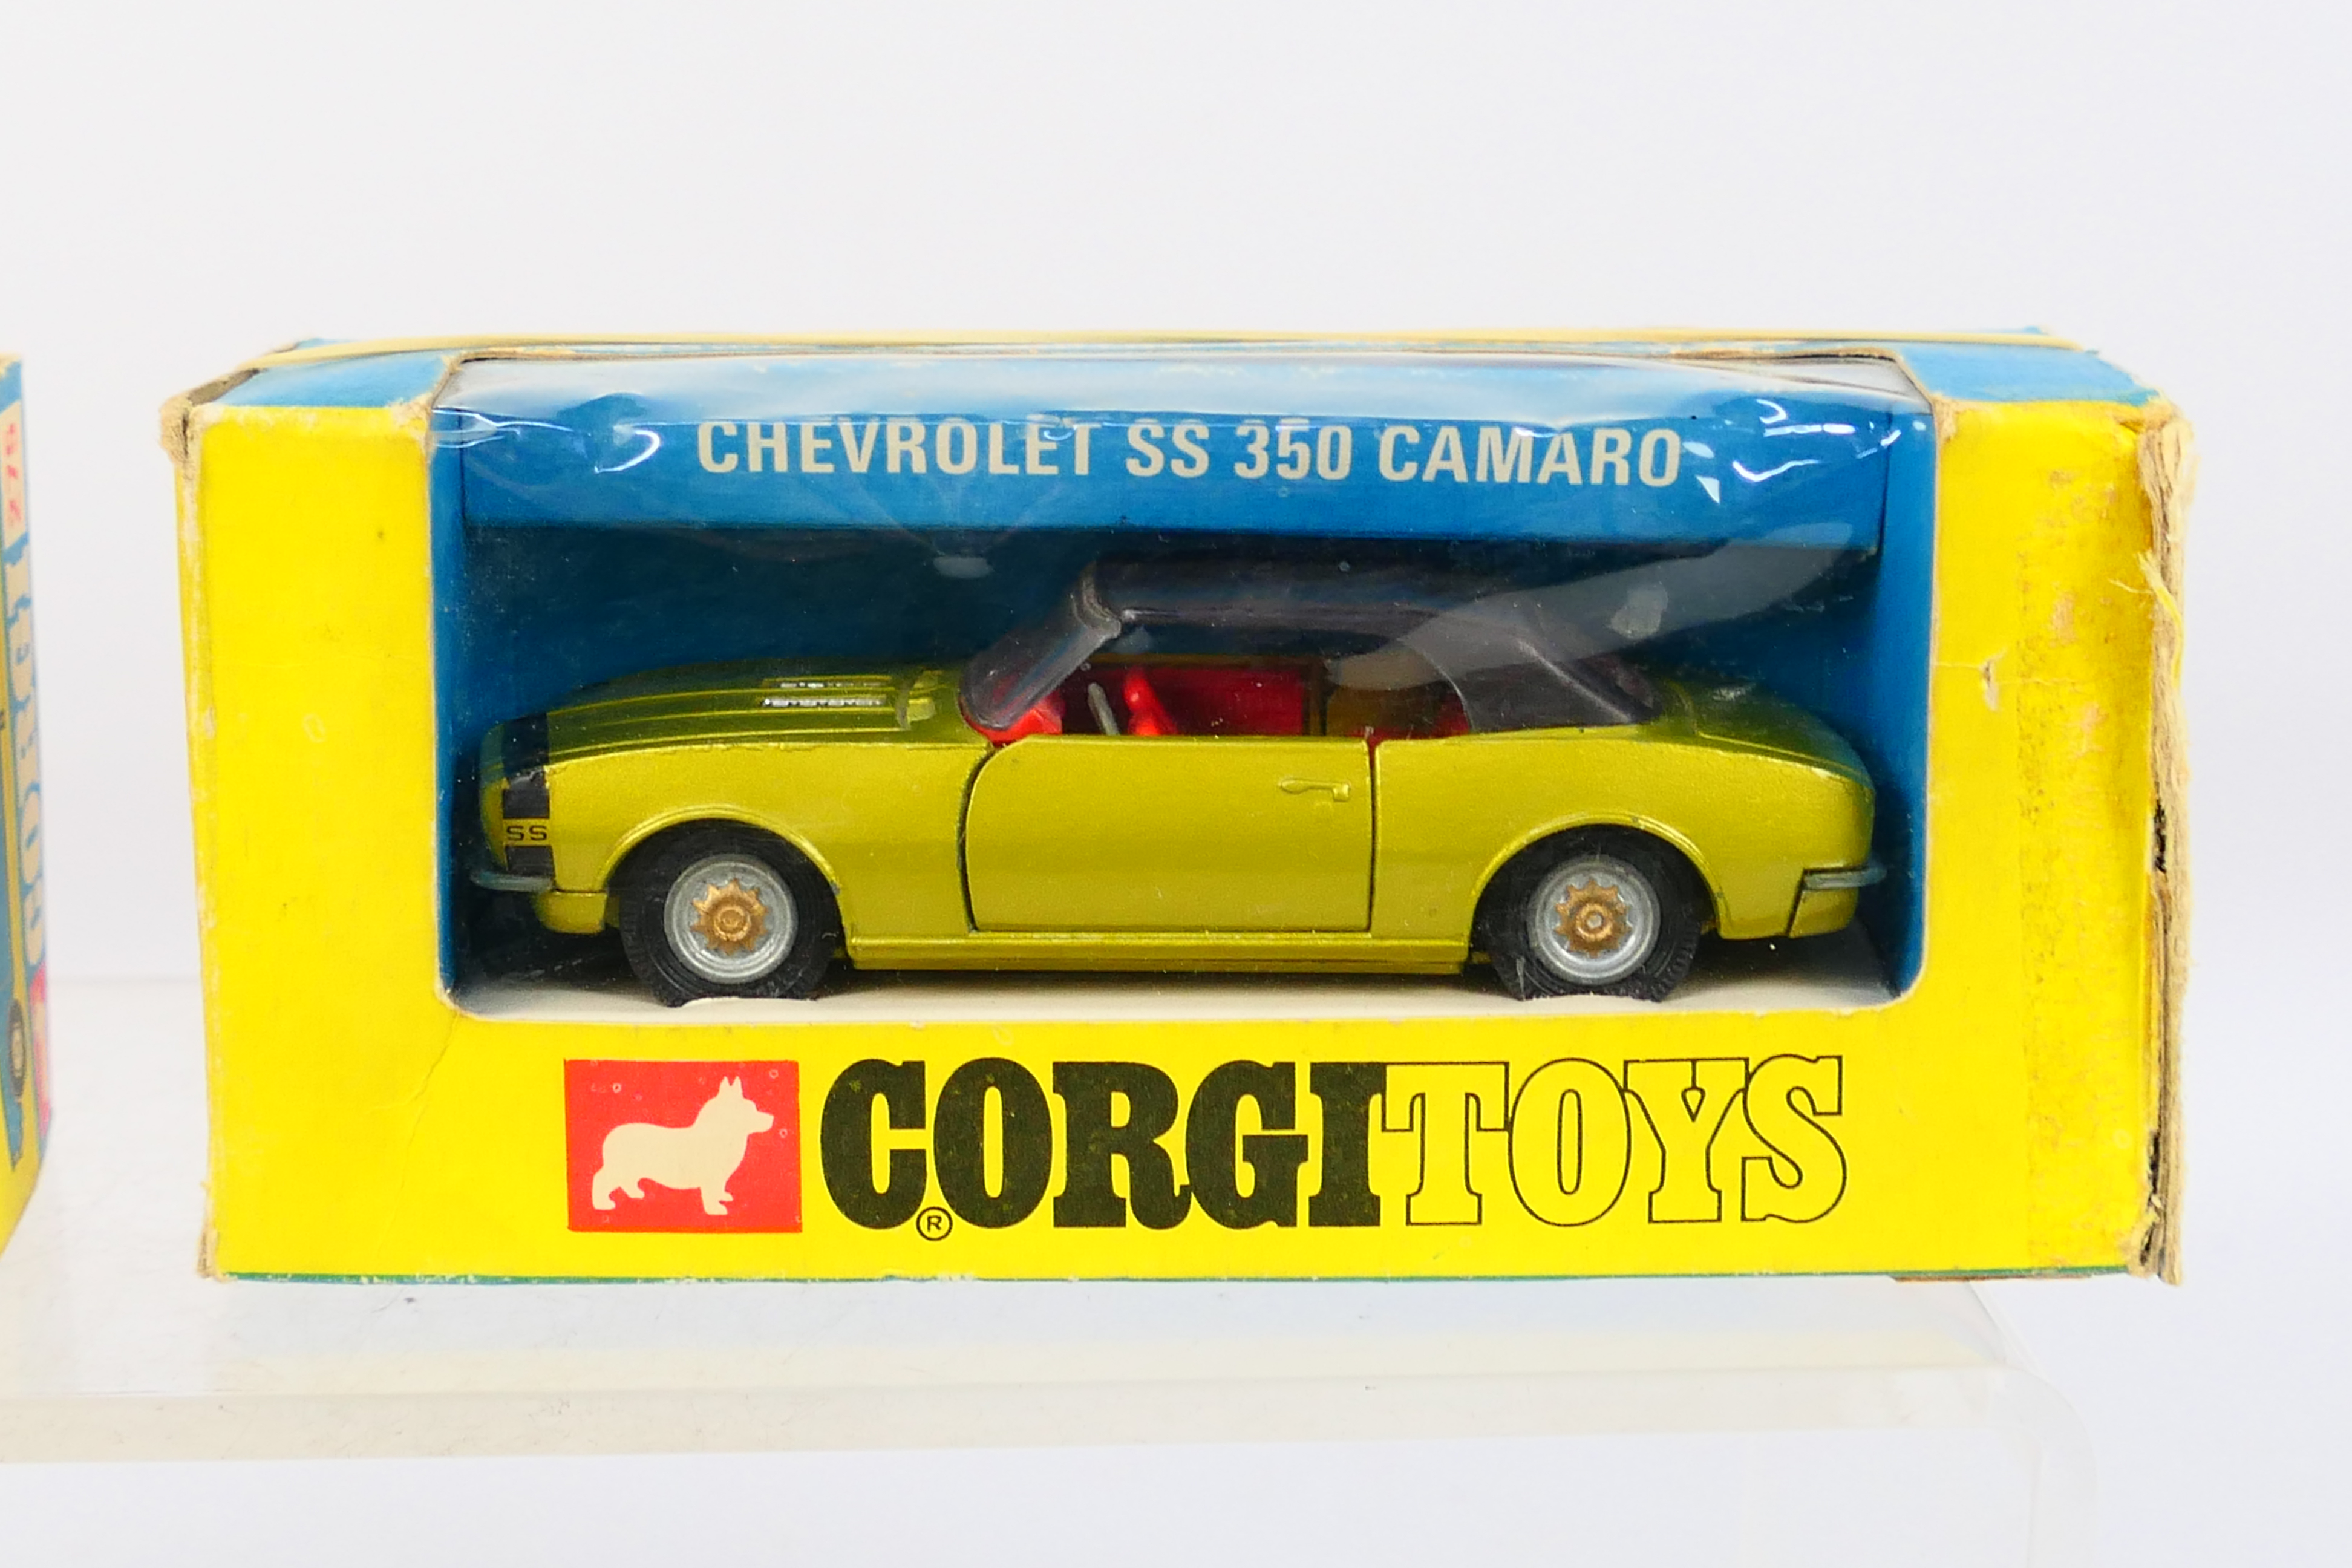 Corgi - Golden Jacks - 2 x boxed models Rover 2000 TC # 275 and Chevrolet Camaro SS # 338. - Image 3 of 8